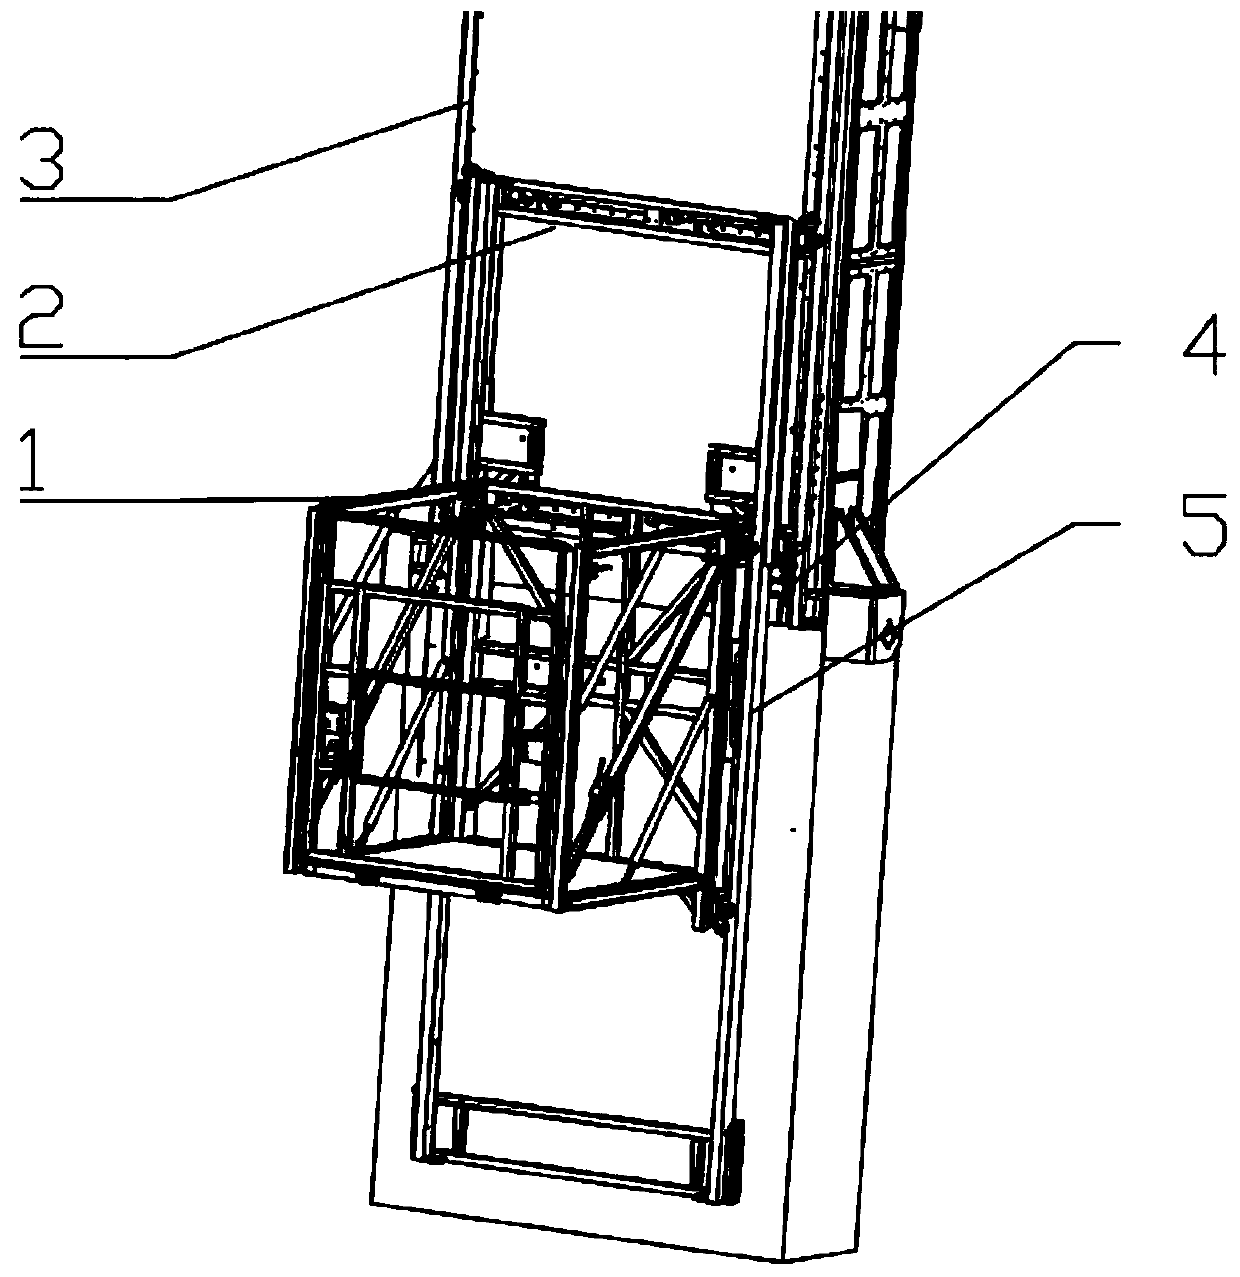 Folding telescopic type maintenance lifting ladder